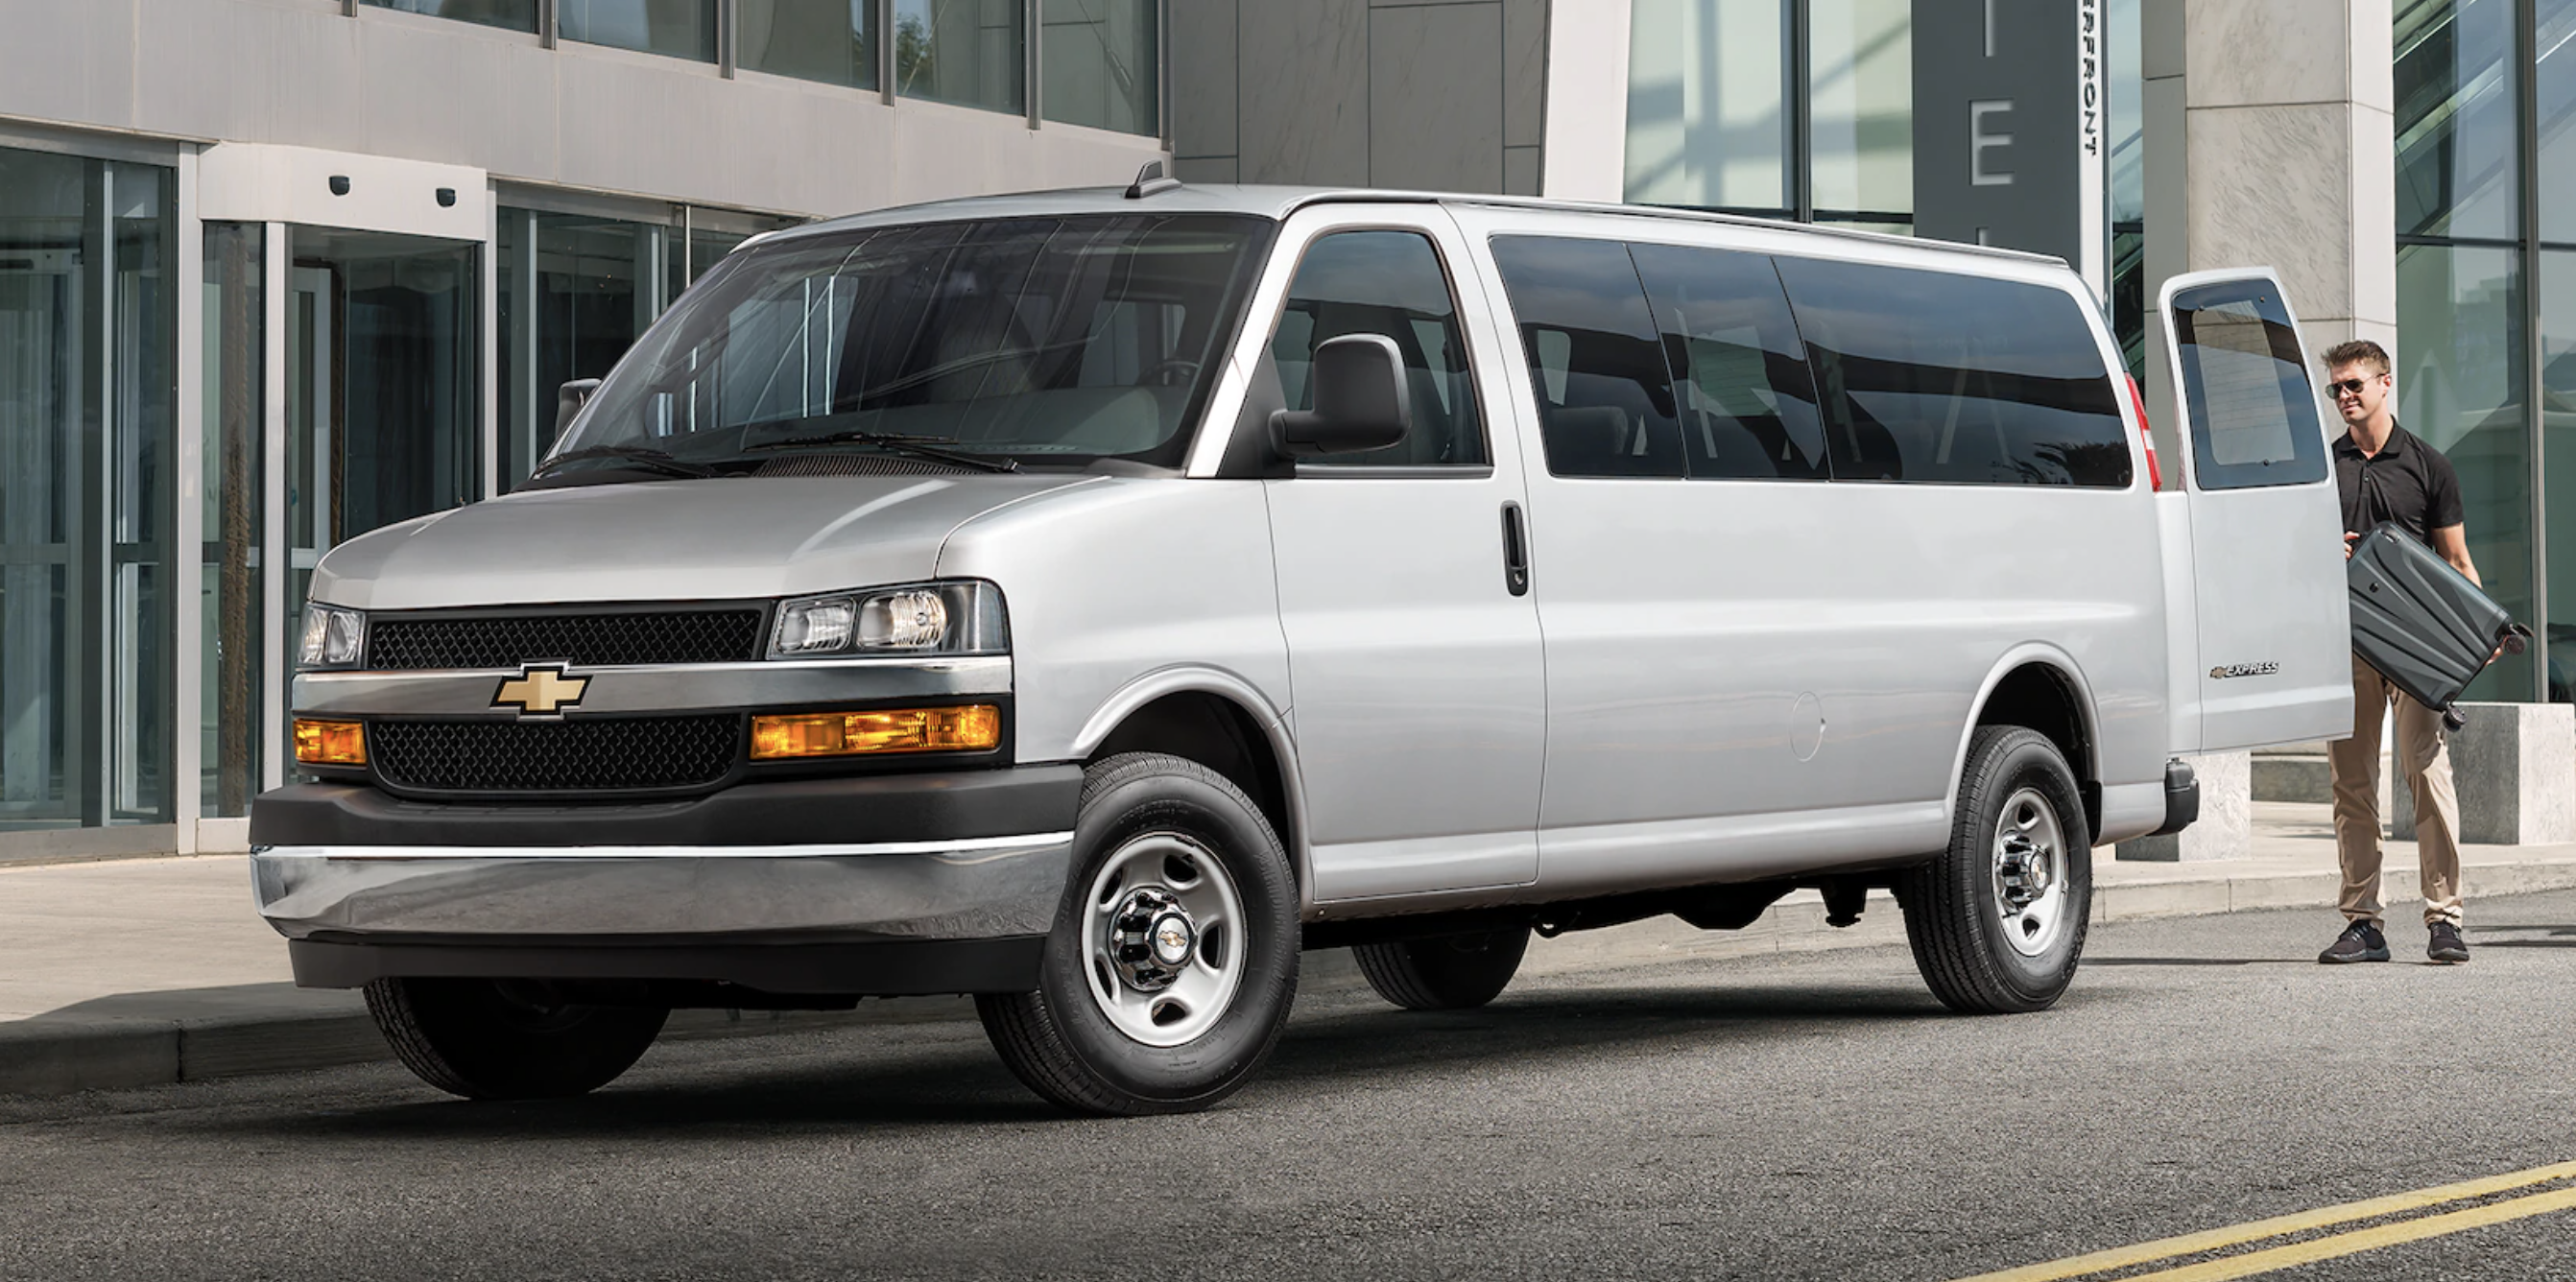 The Full-Size Van: